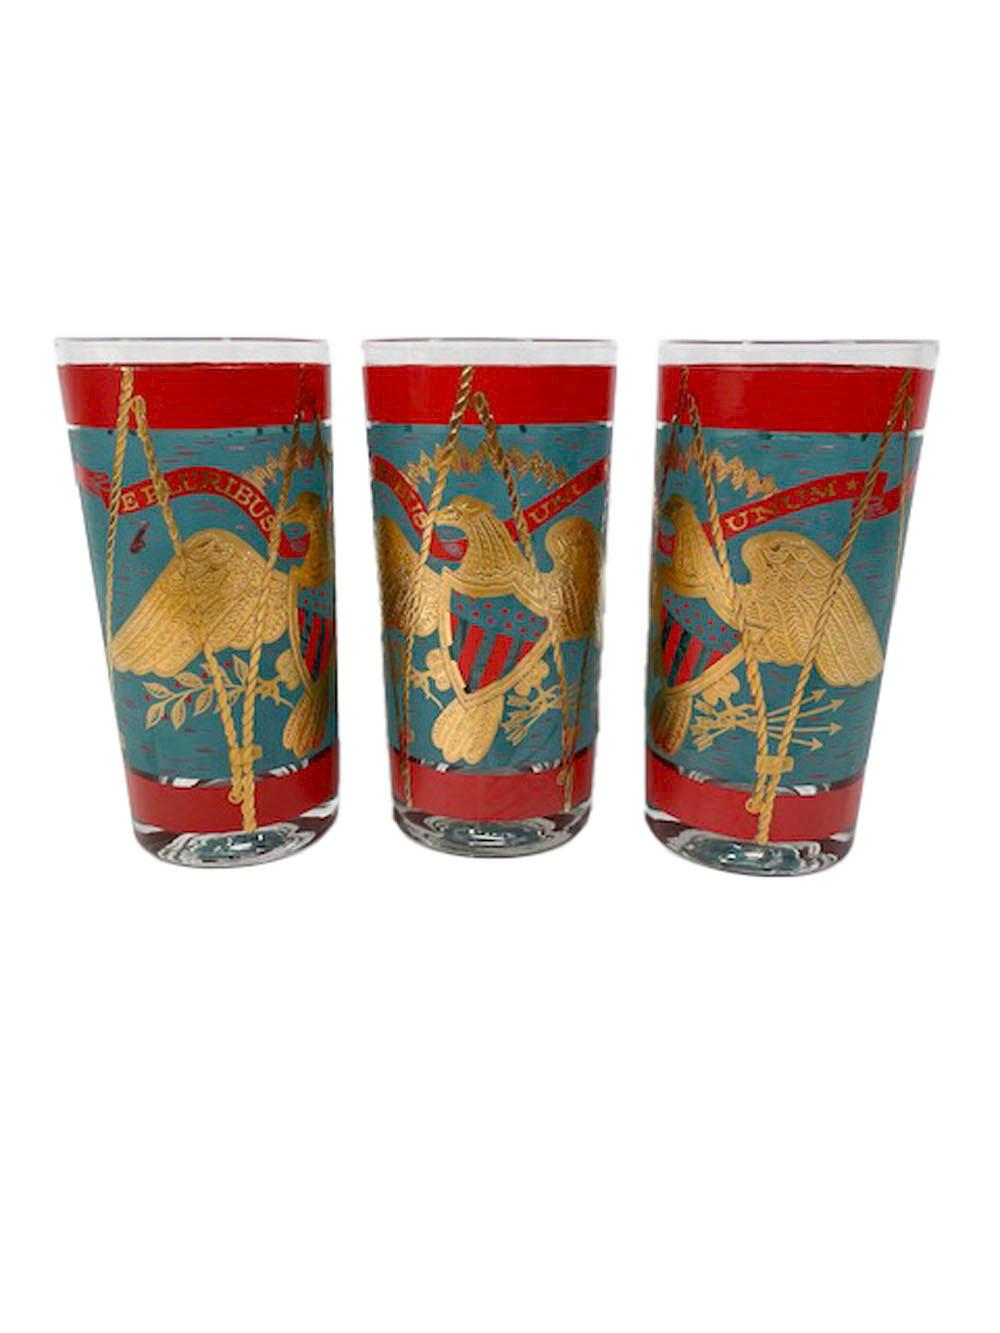 Vintage Cera Patriotic Drum Highball Glasses in Teal & Red Enamel with 22k Gold For Sale 1